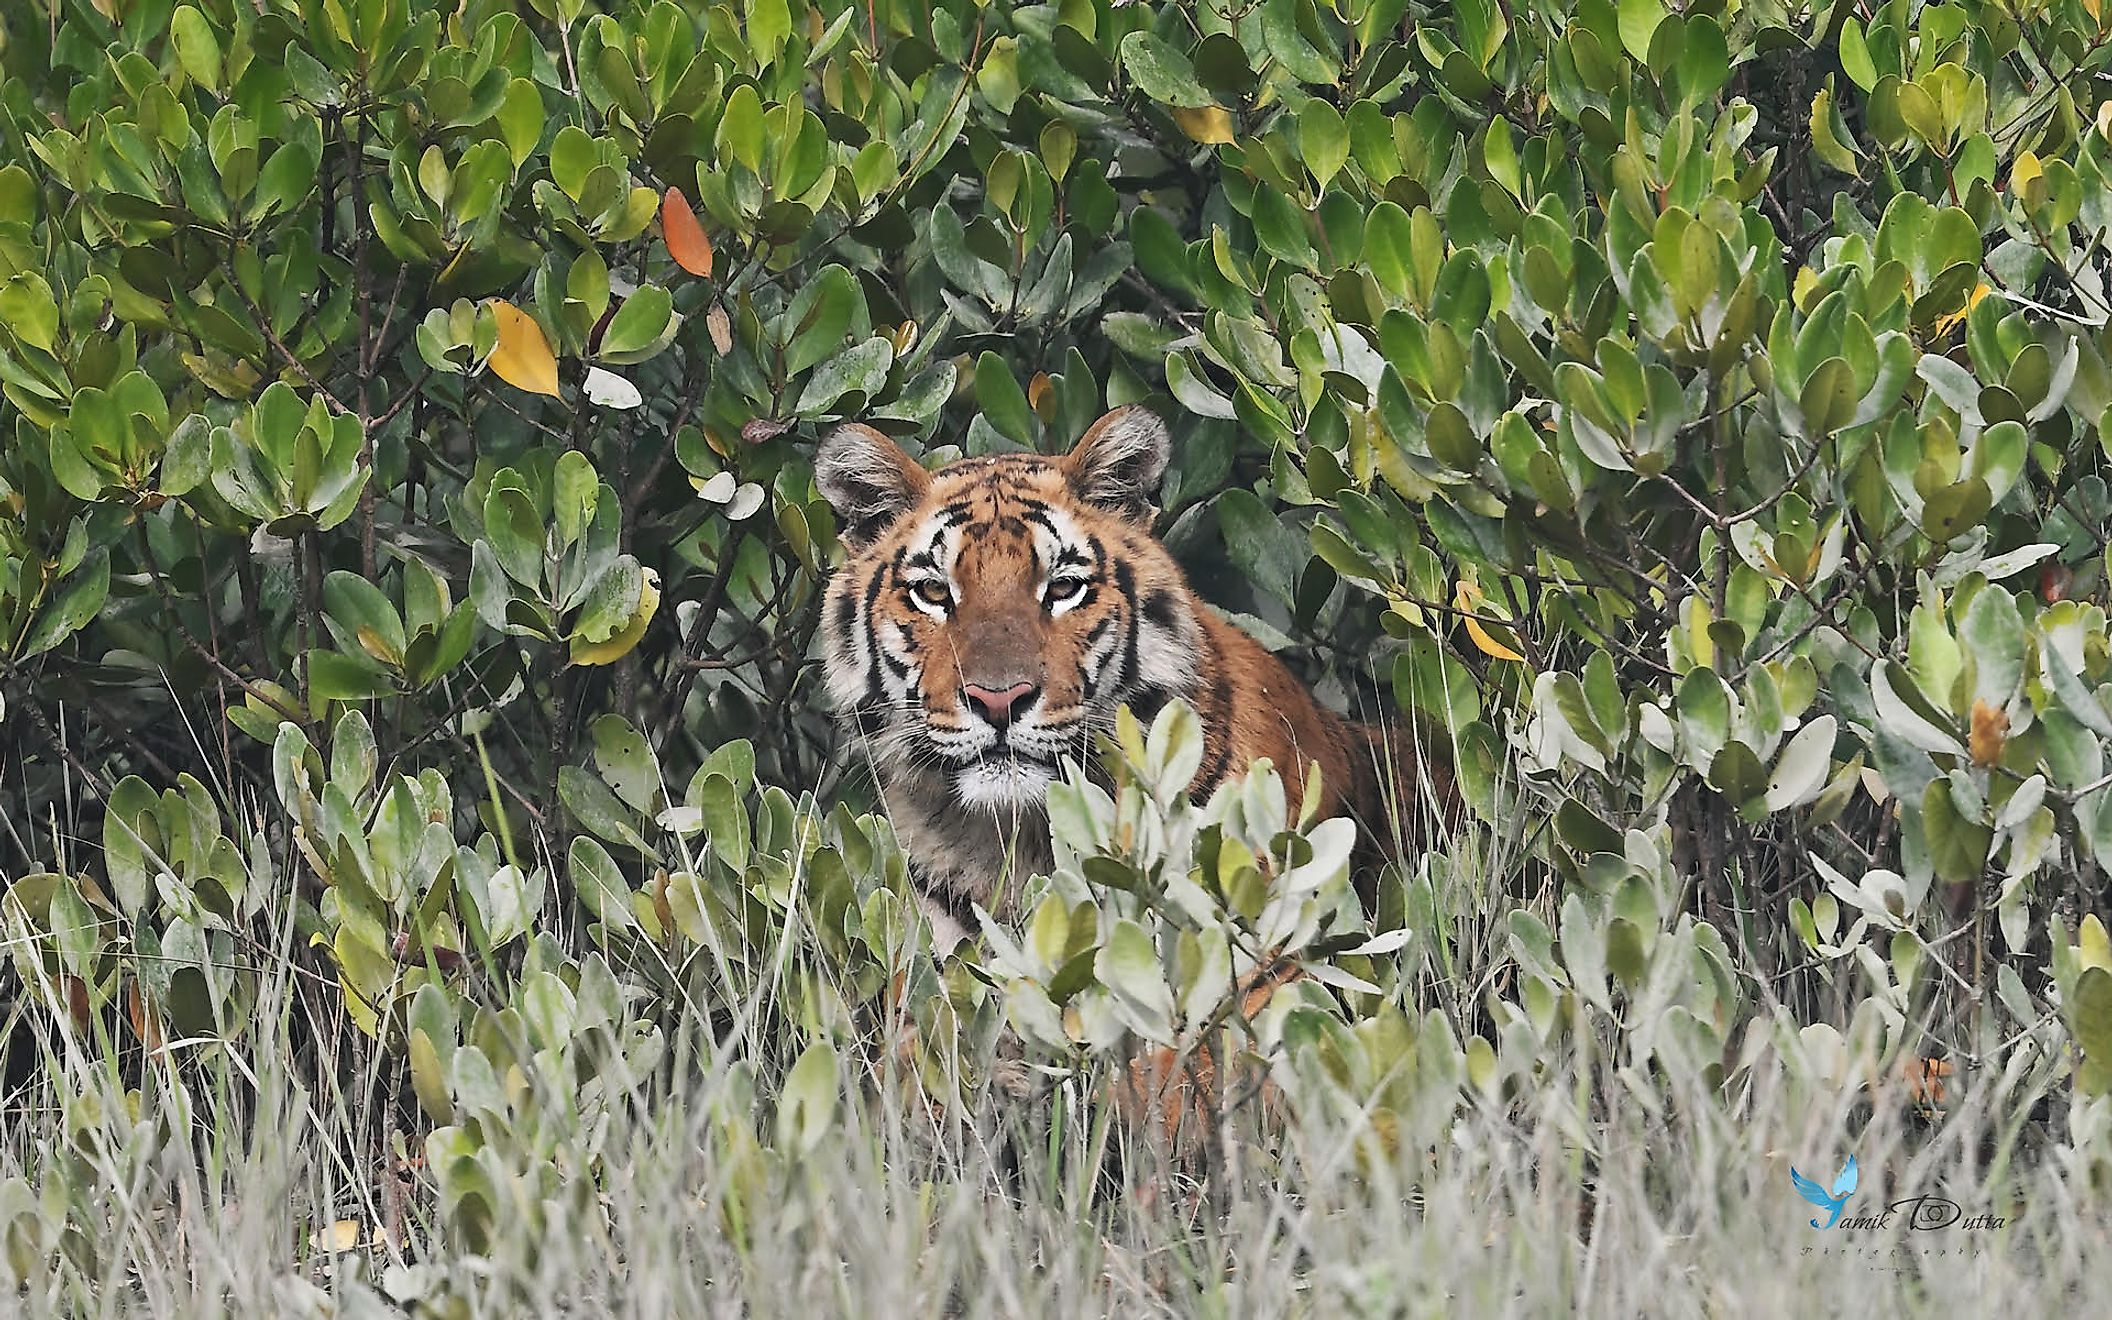 The Sundarbans tiger. Image credit: Samik Dutta